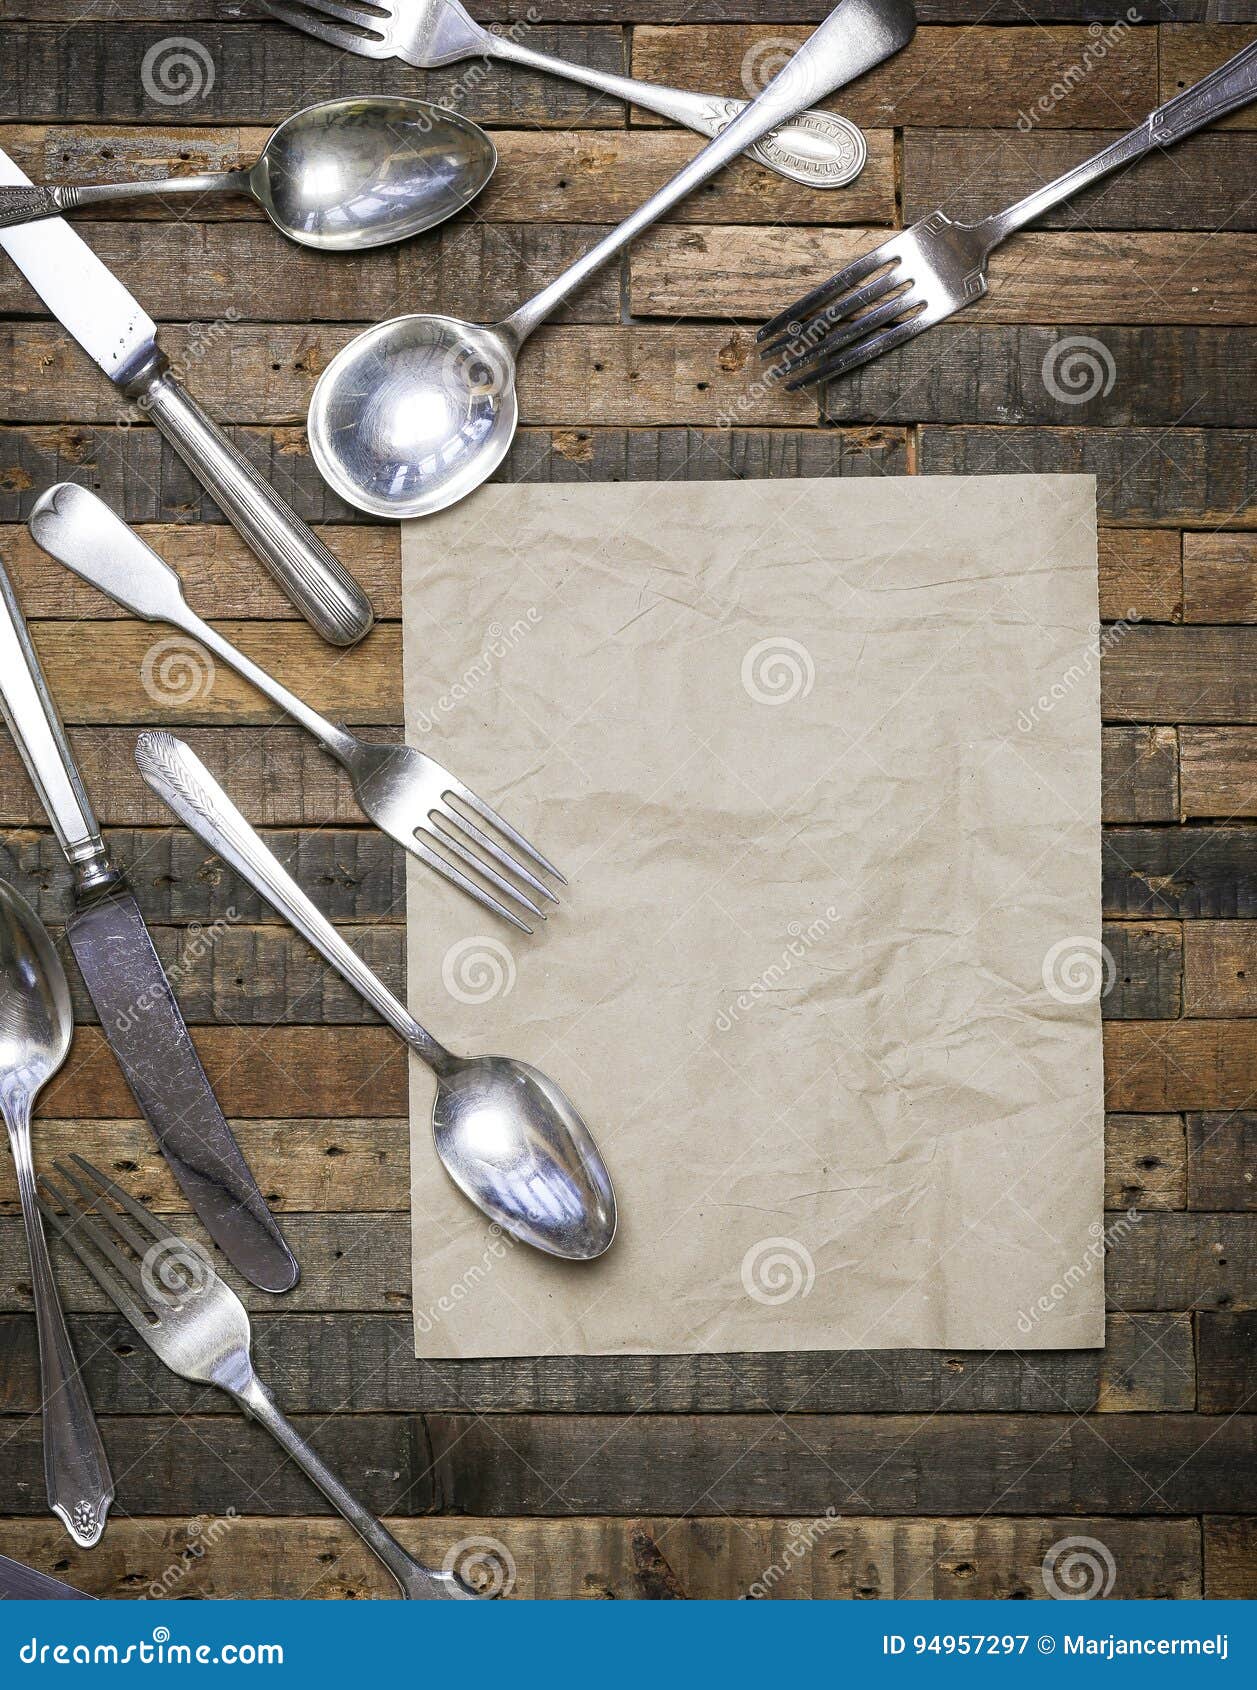 vintage spoons forks and knives wooden background flat lay instagram mockup